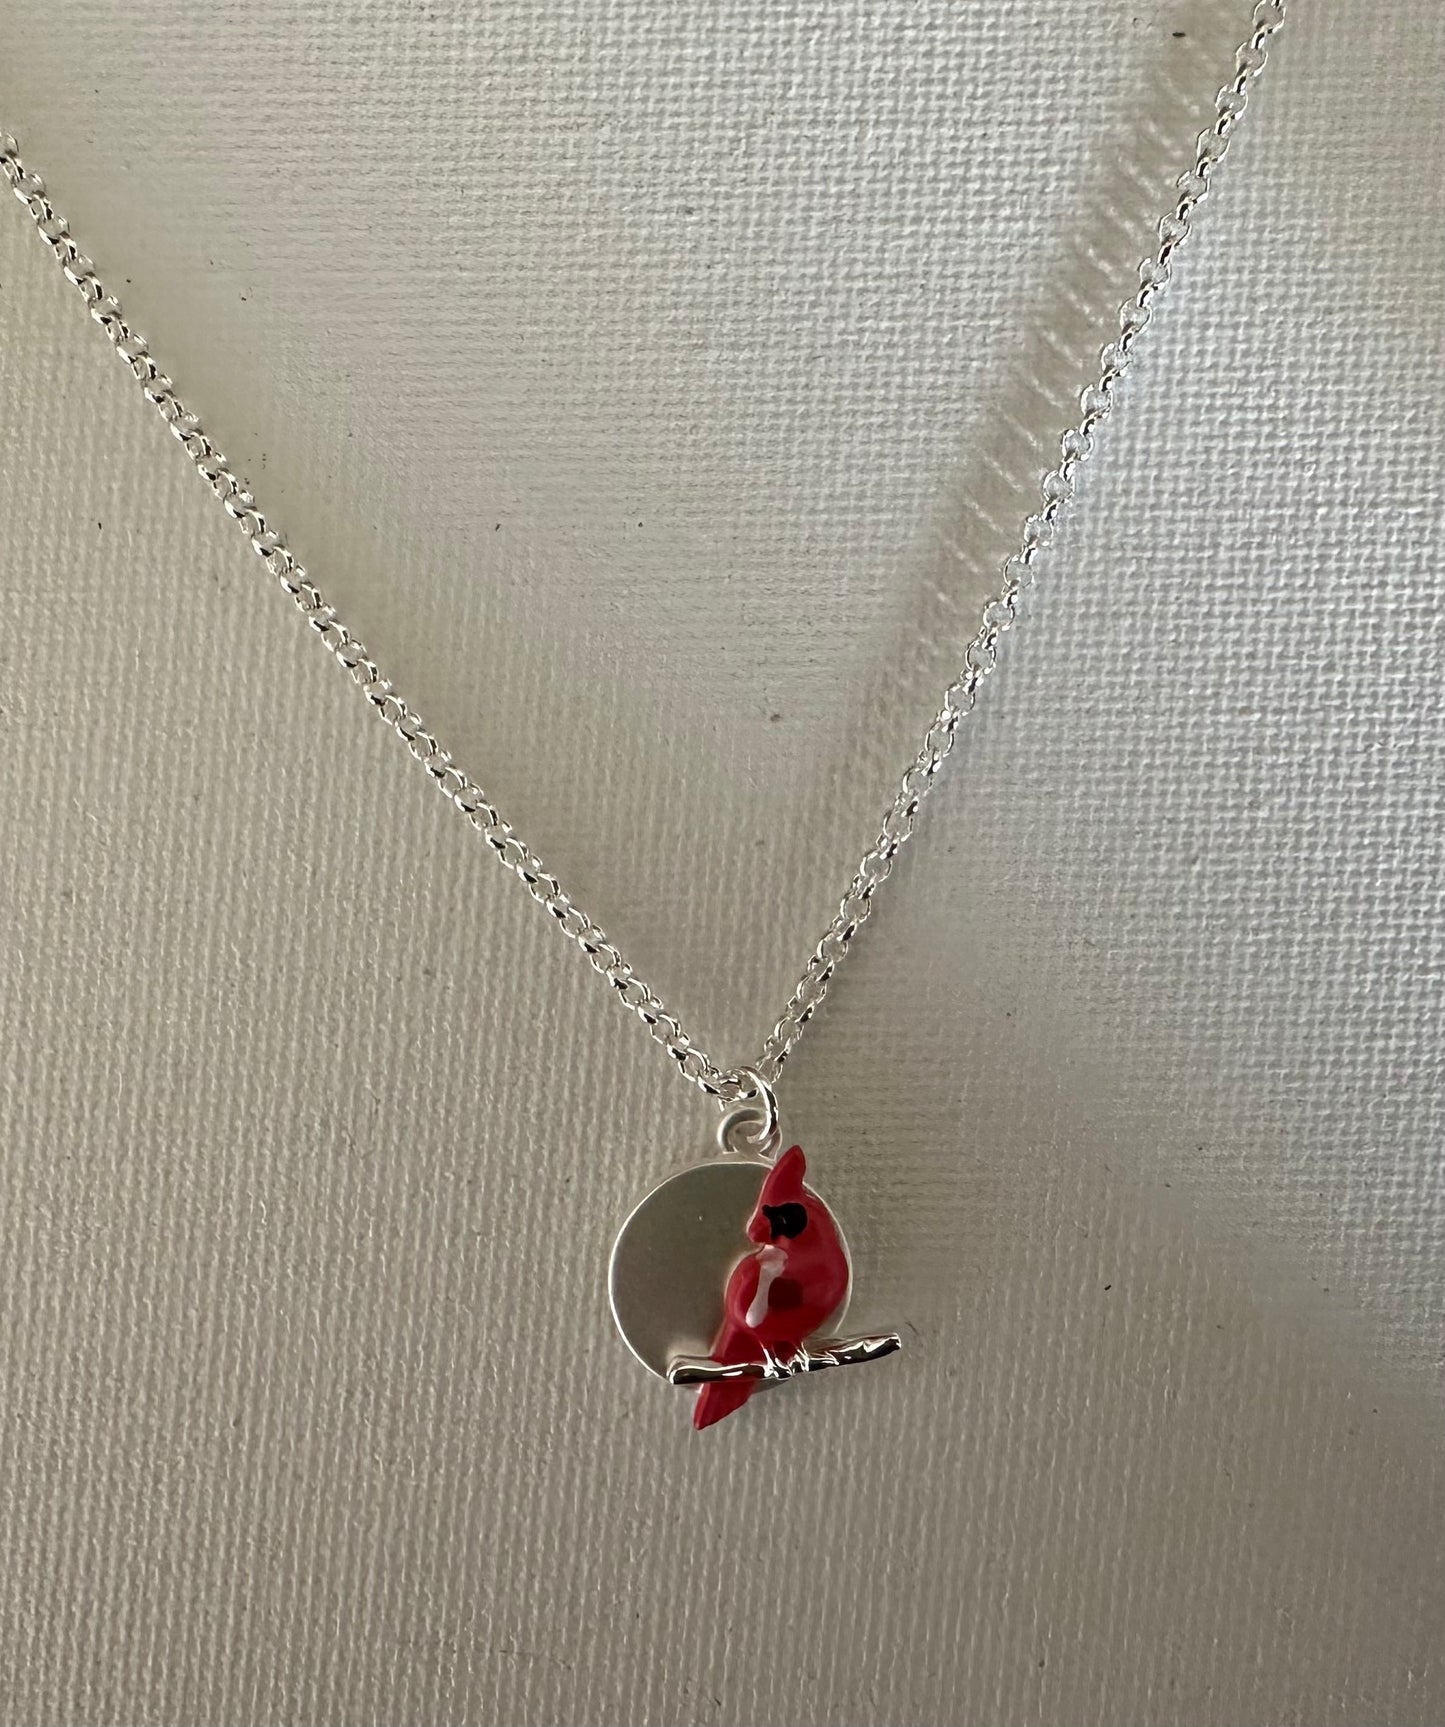 Cardinal CARDED Necklace